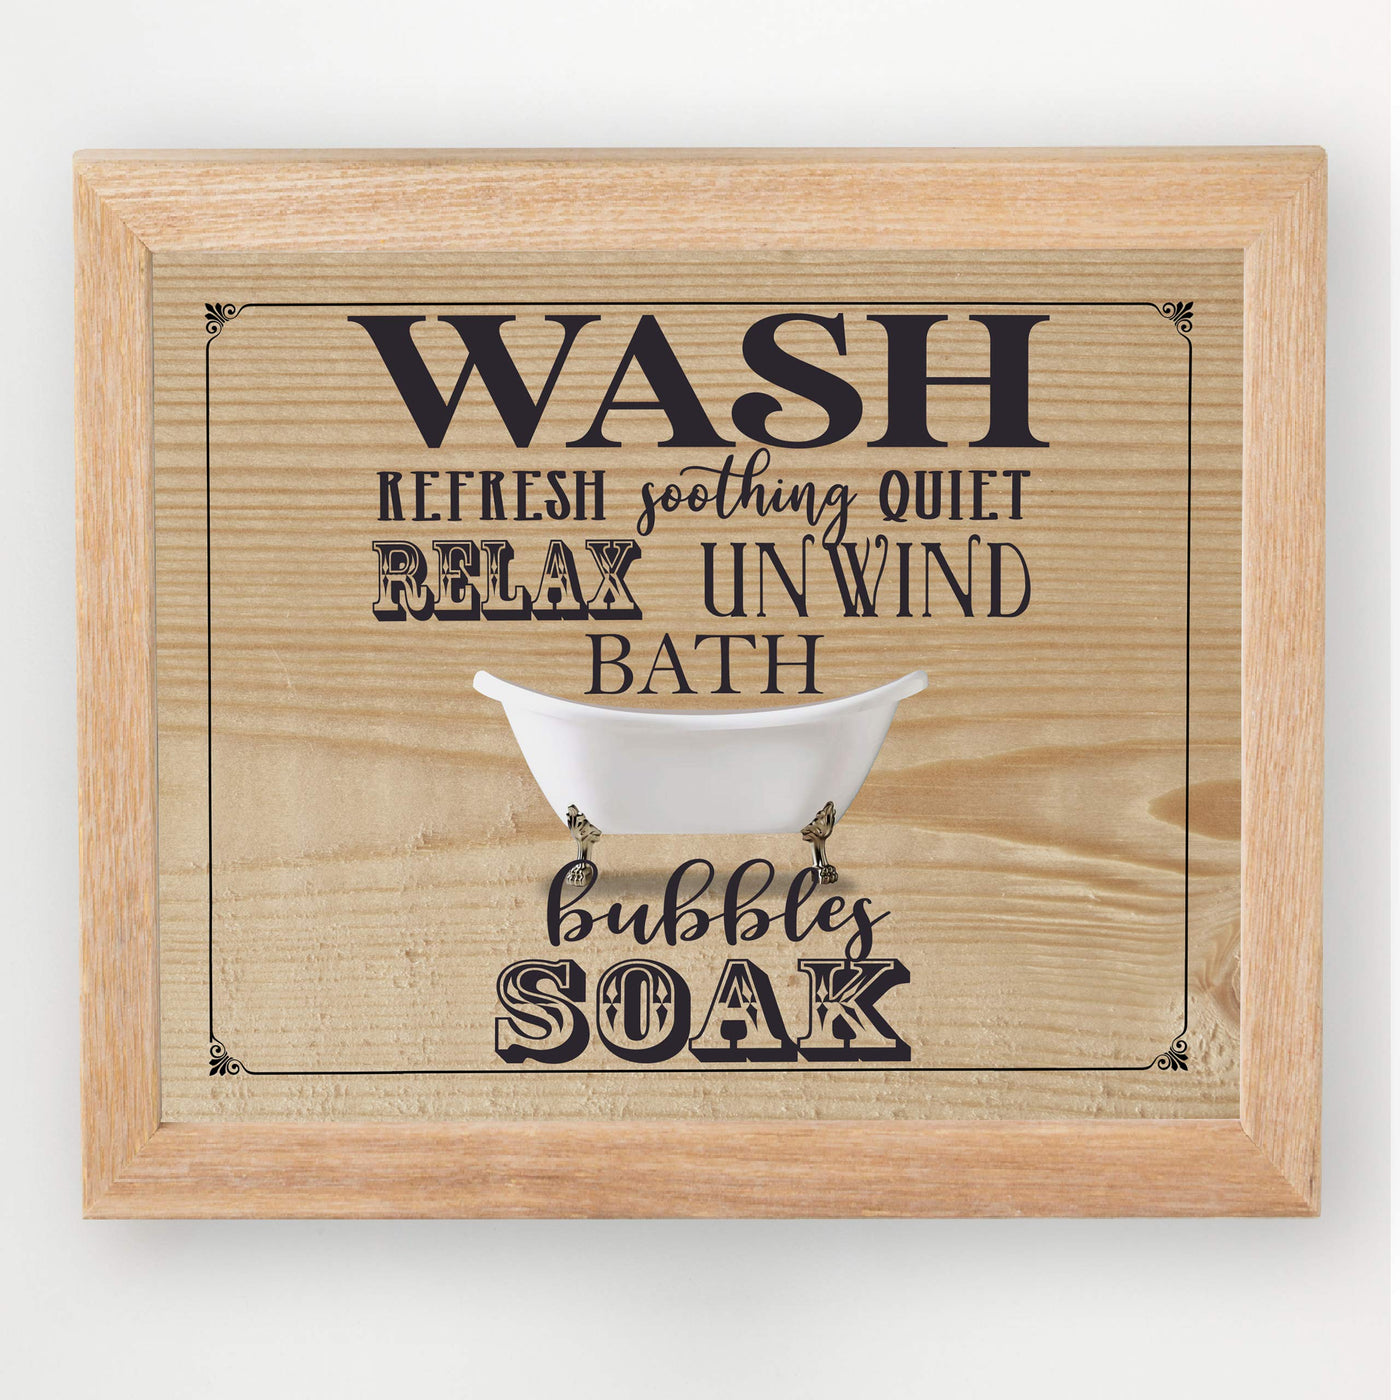 Wash-Relax-Unwind-Soak-Vintage Bathroom Art-10 x 8" Country Rustic Wall Print w/Replica Wood Design-Ready to Frame. Farmhouse Decor for Home-Bathroom-Guest House-Spa Decor. Great Housewarming Gift!